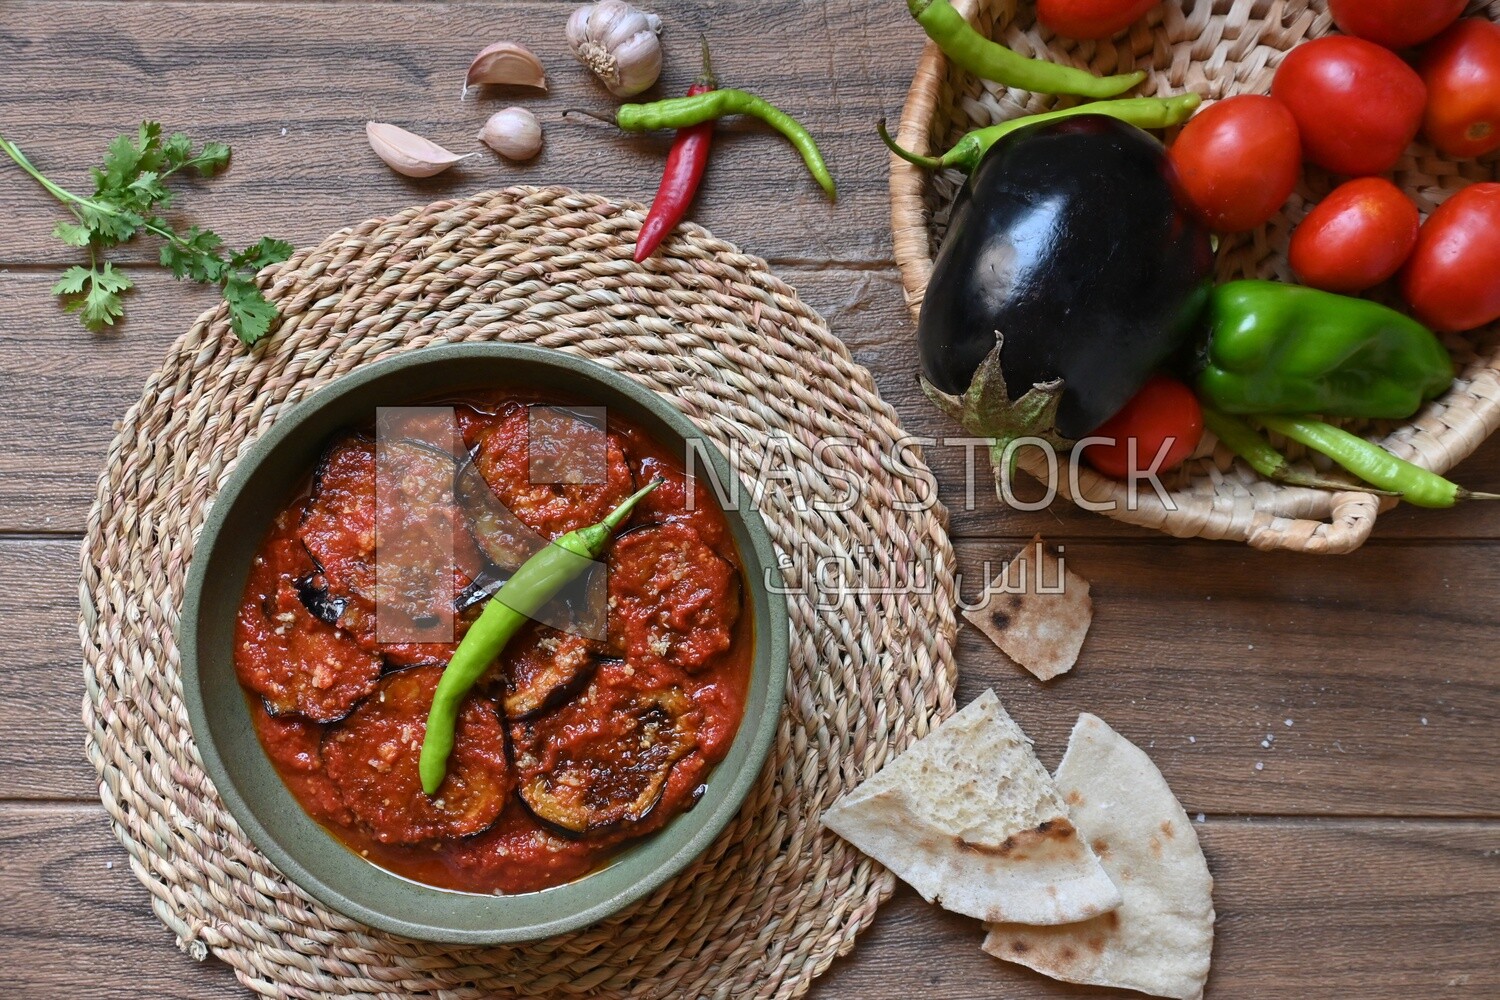 The ingredients of mesaka beside a plate of mesaka